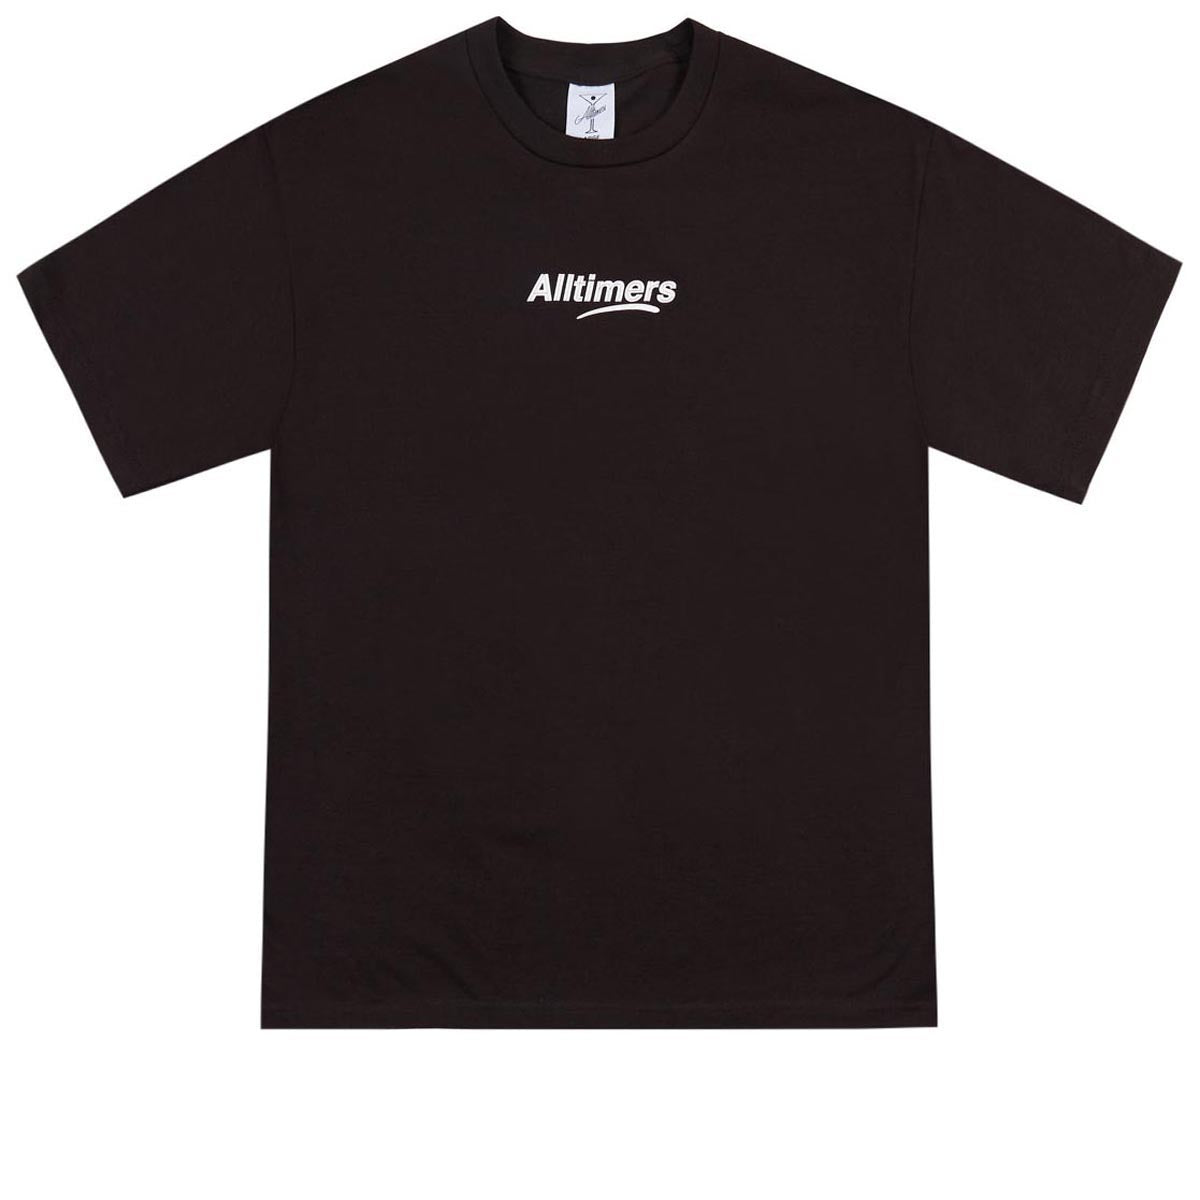 Alltimers Medium Estate T-Shirt - Black image 1